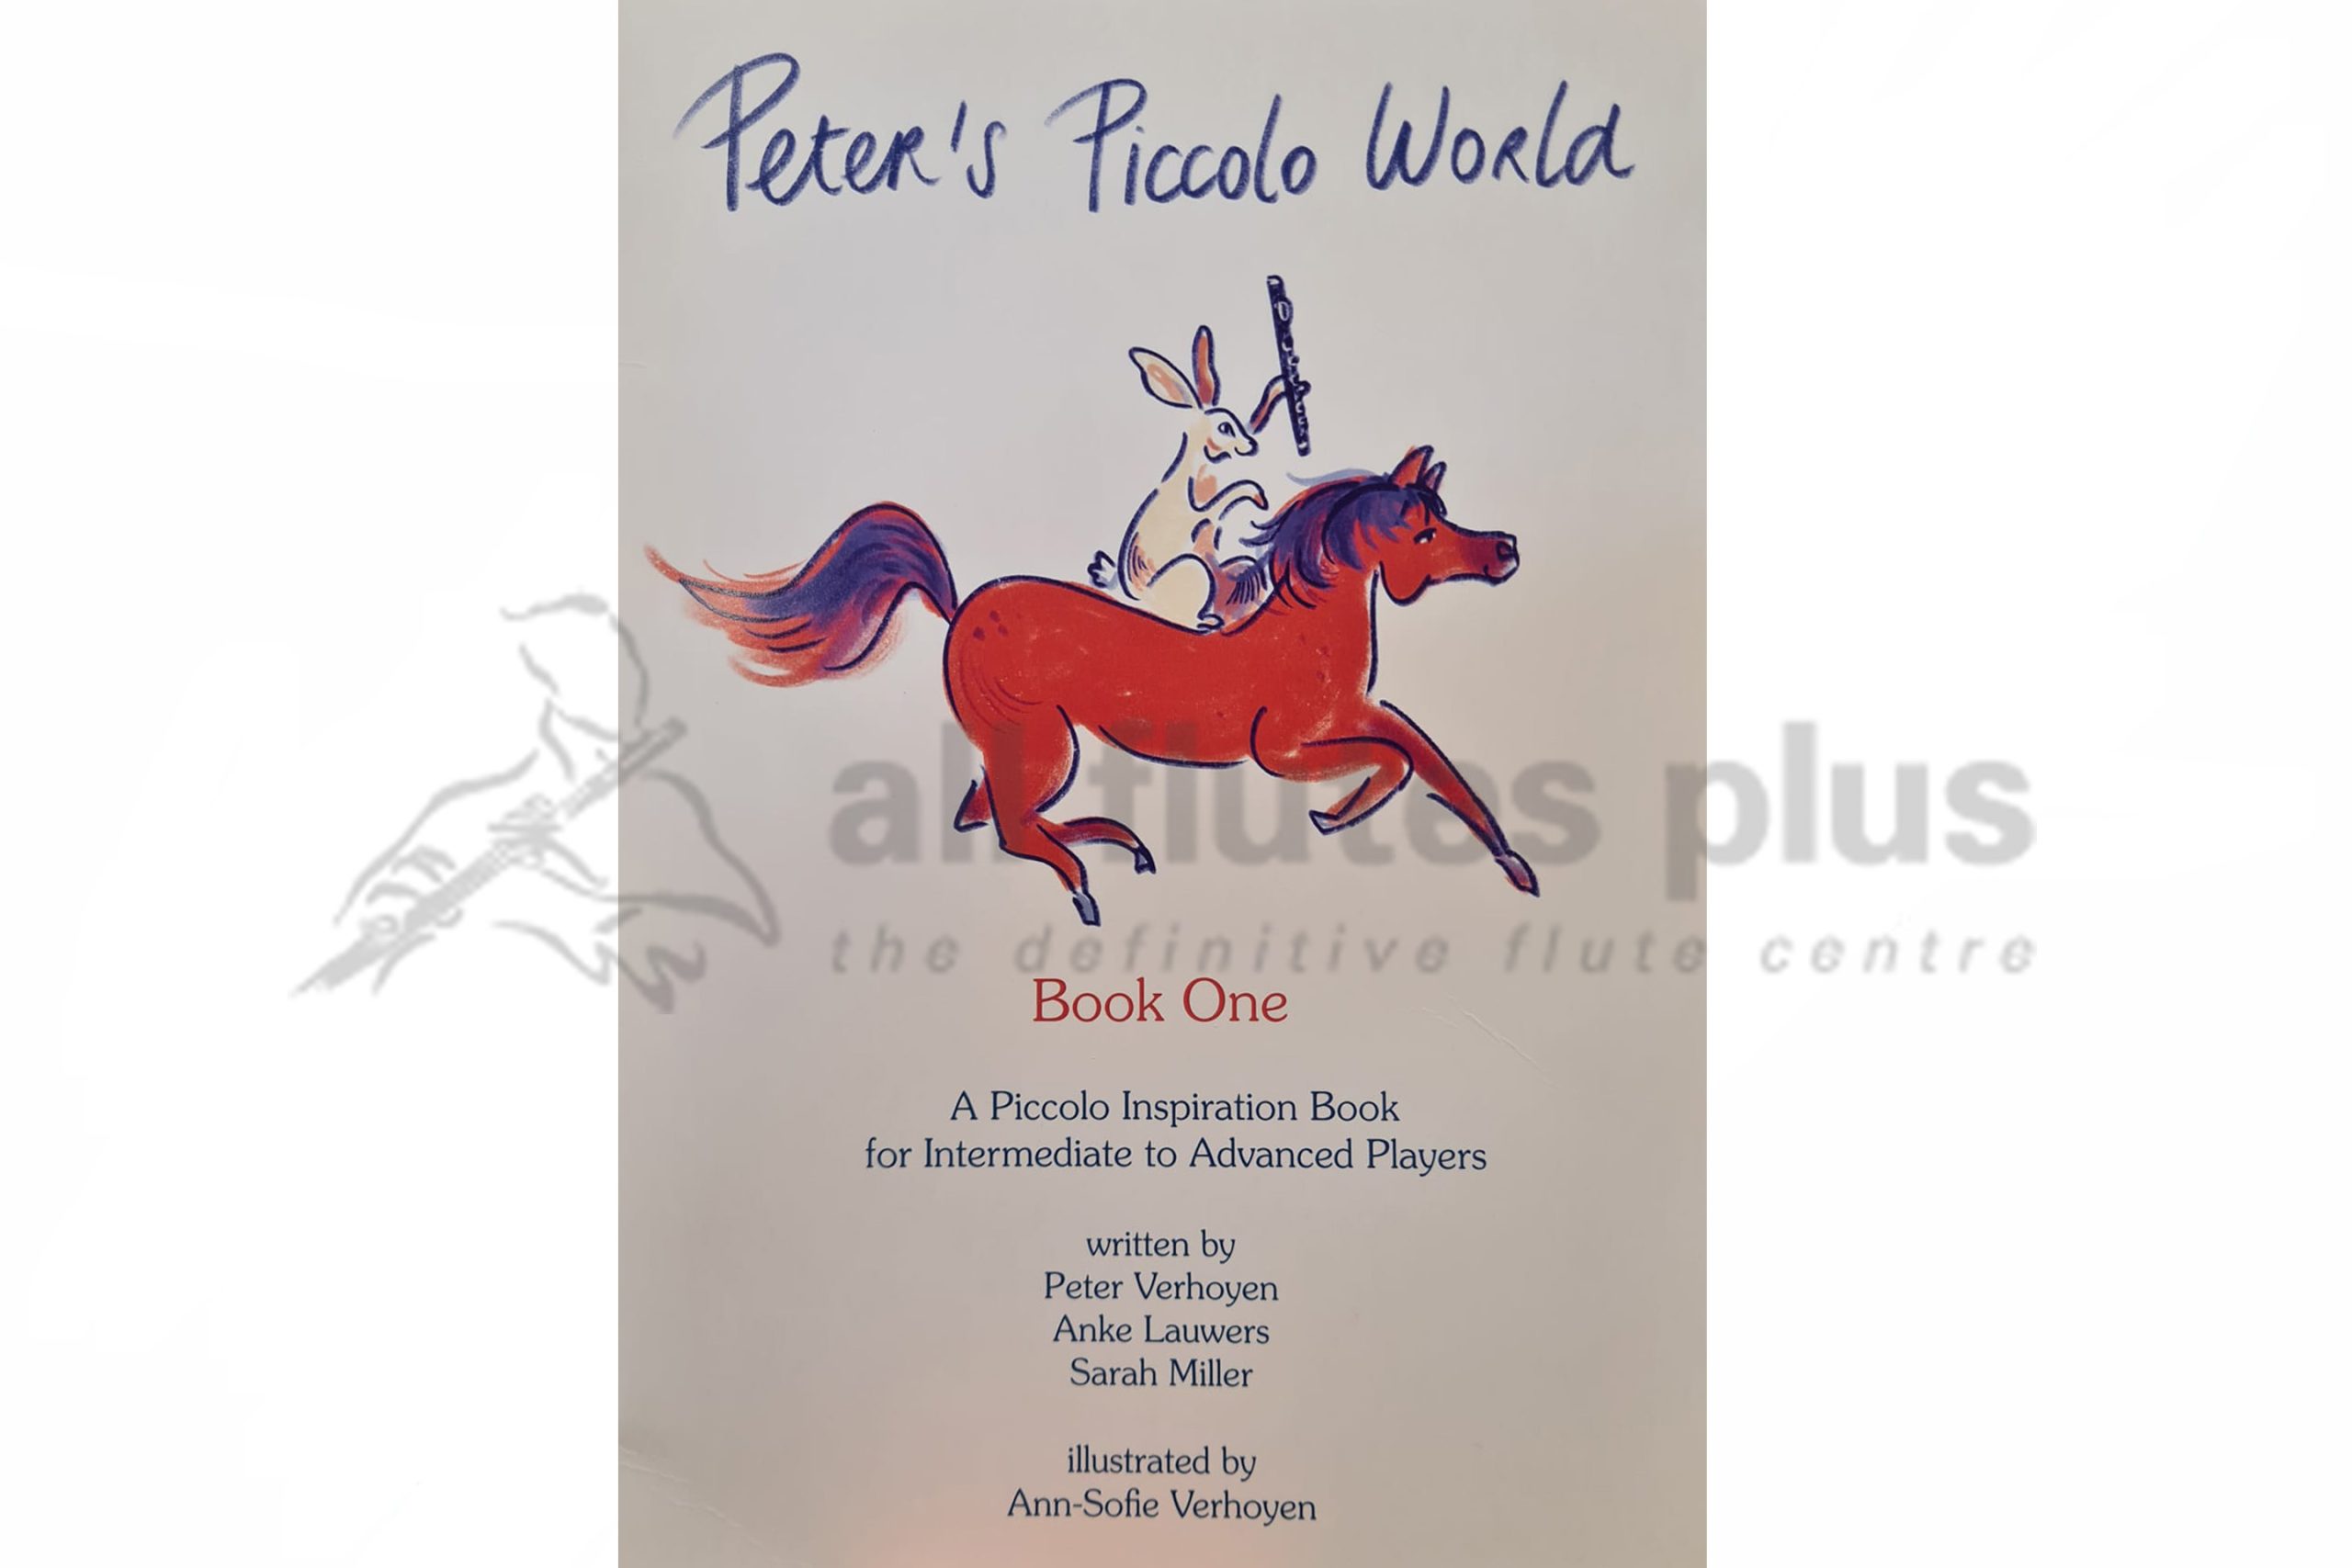 Peter's Piccolo World Book One